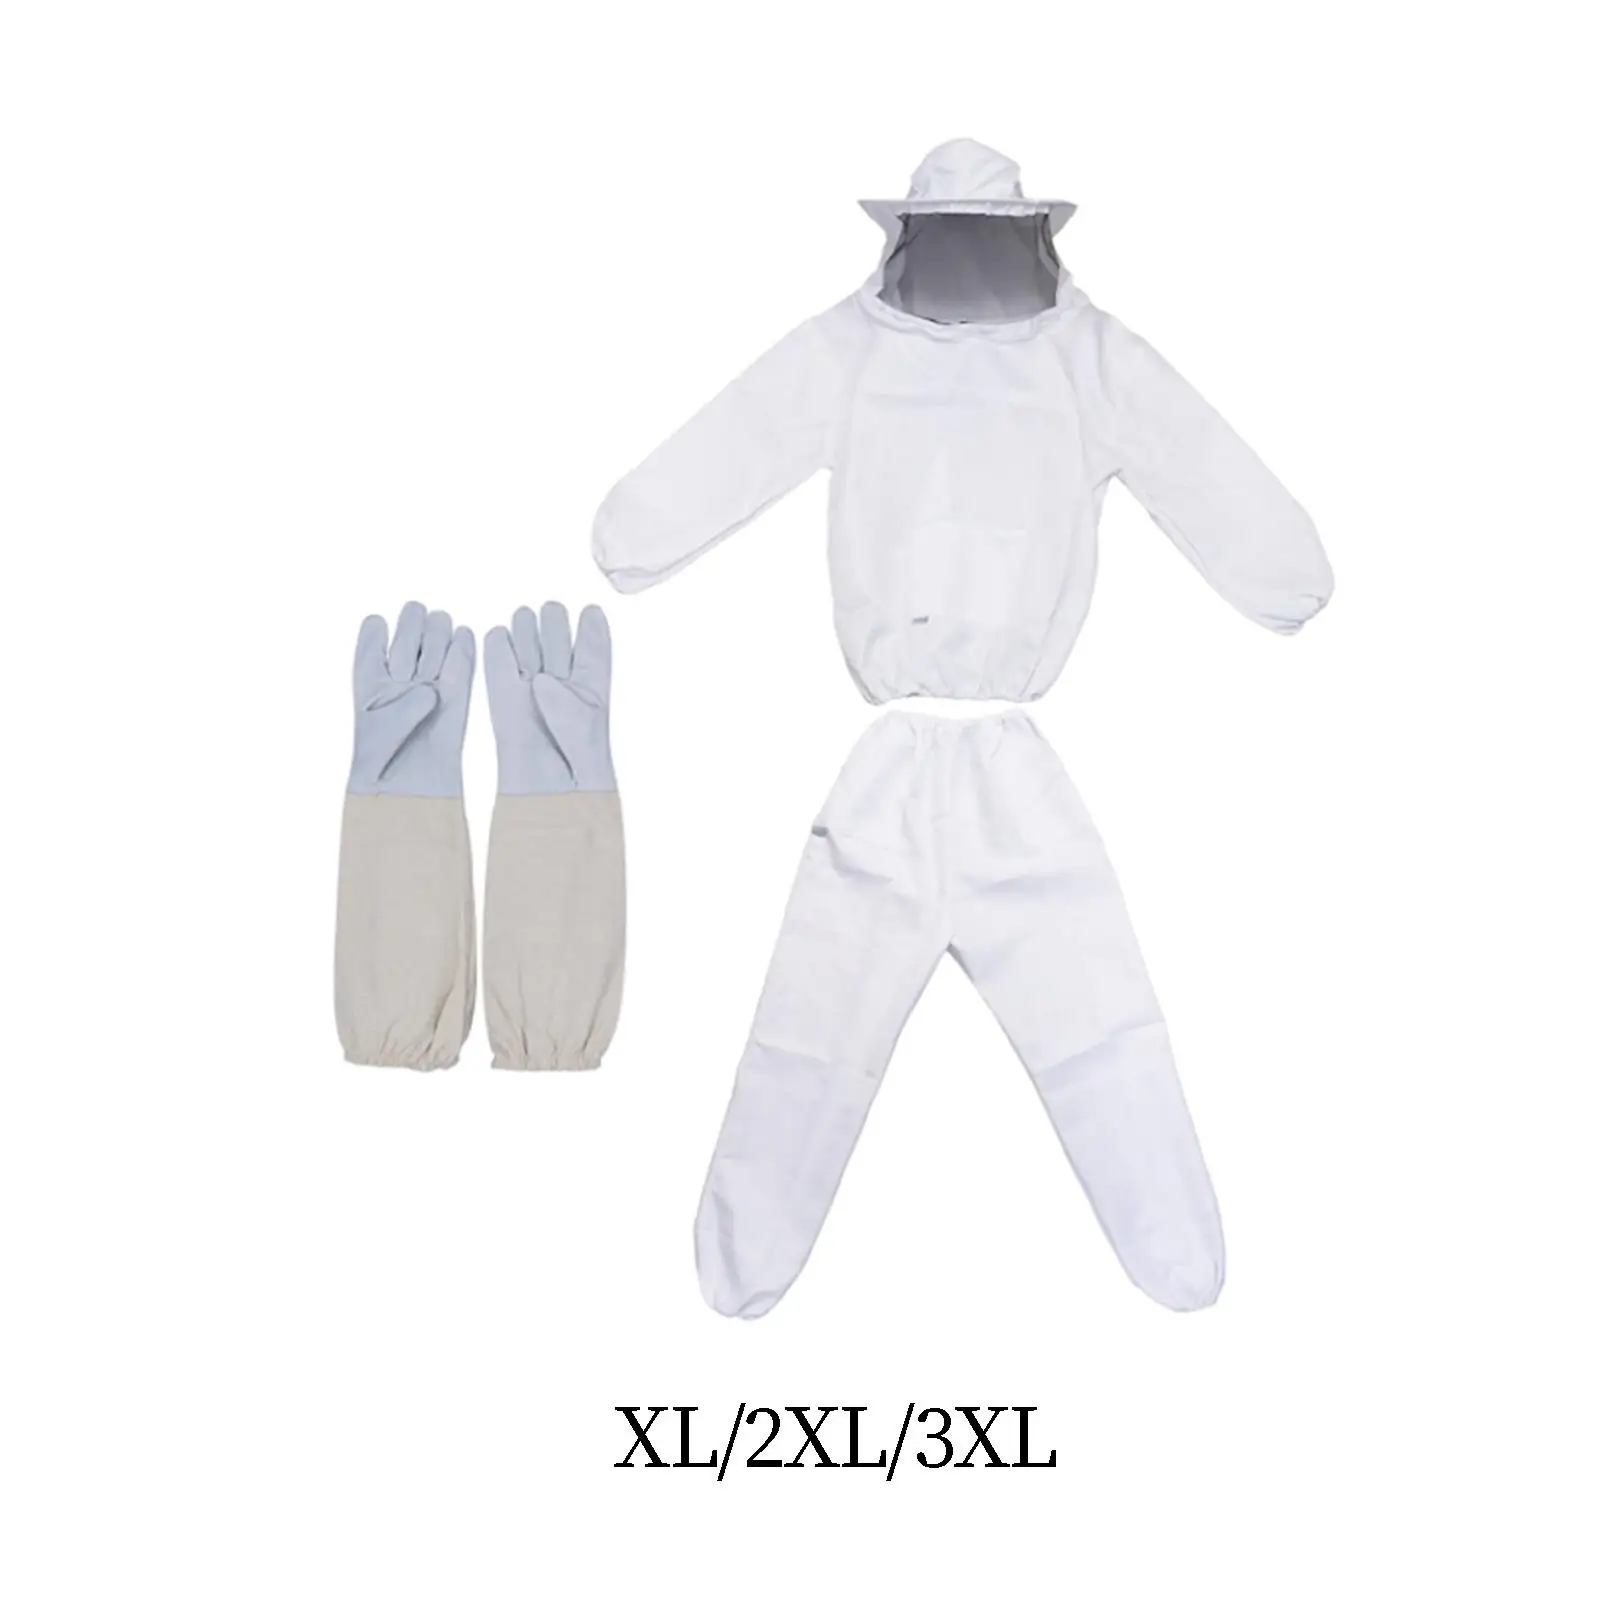 Beekeeping Suit Elastic Cuffs Complete with Glove Bee Suit for Men Women